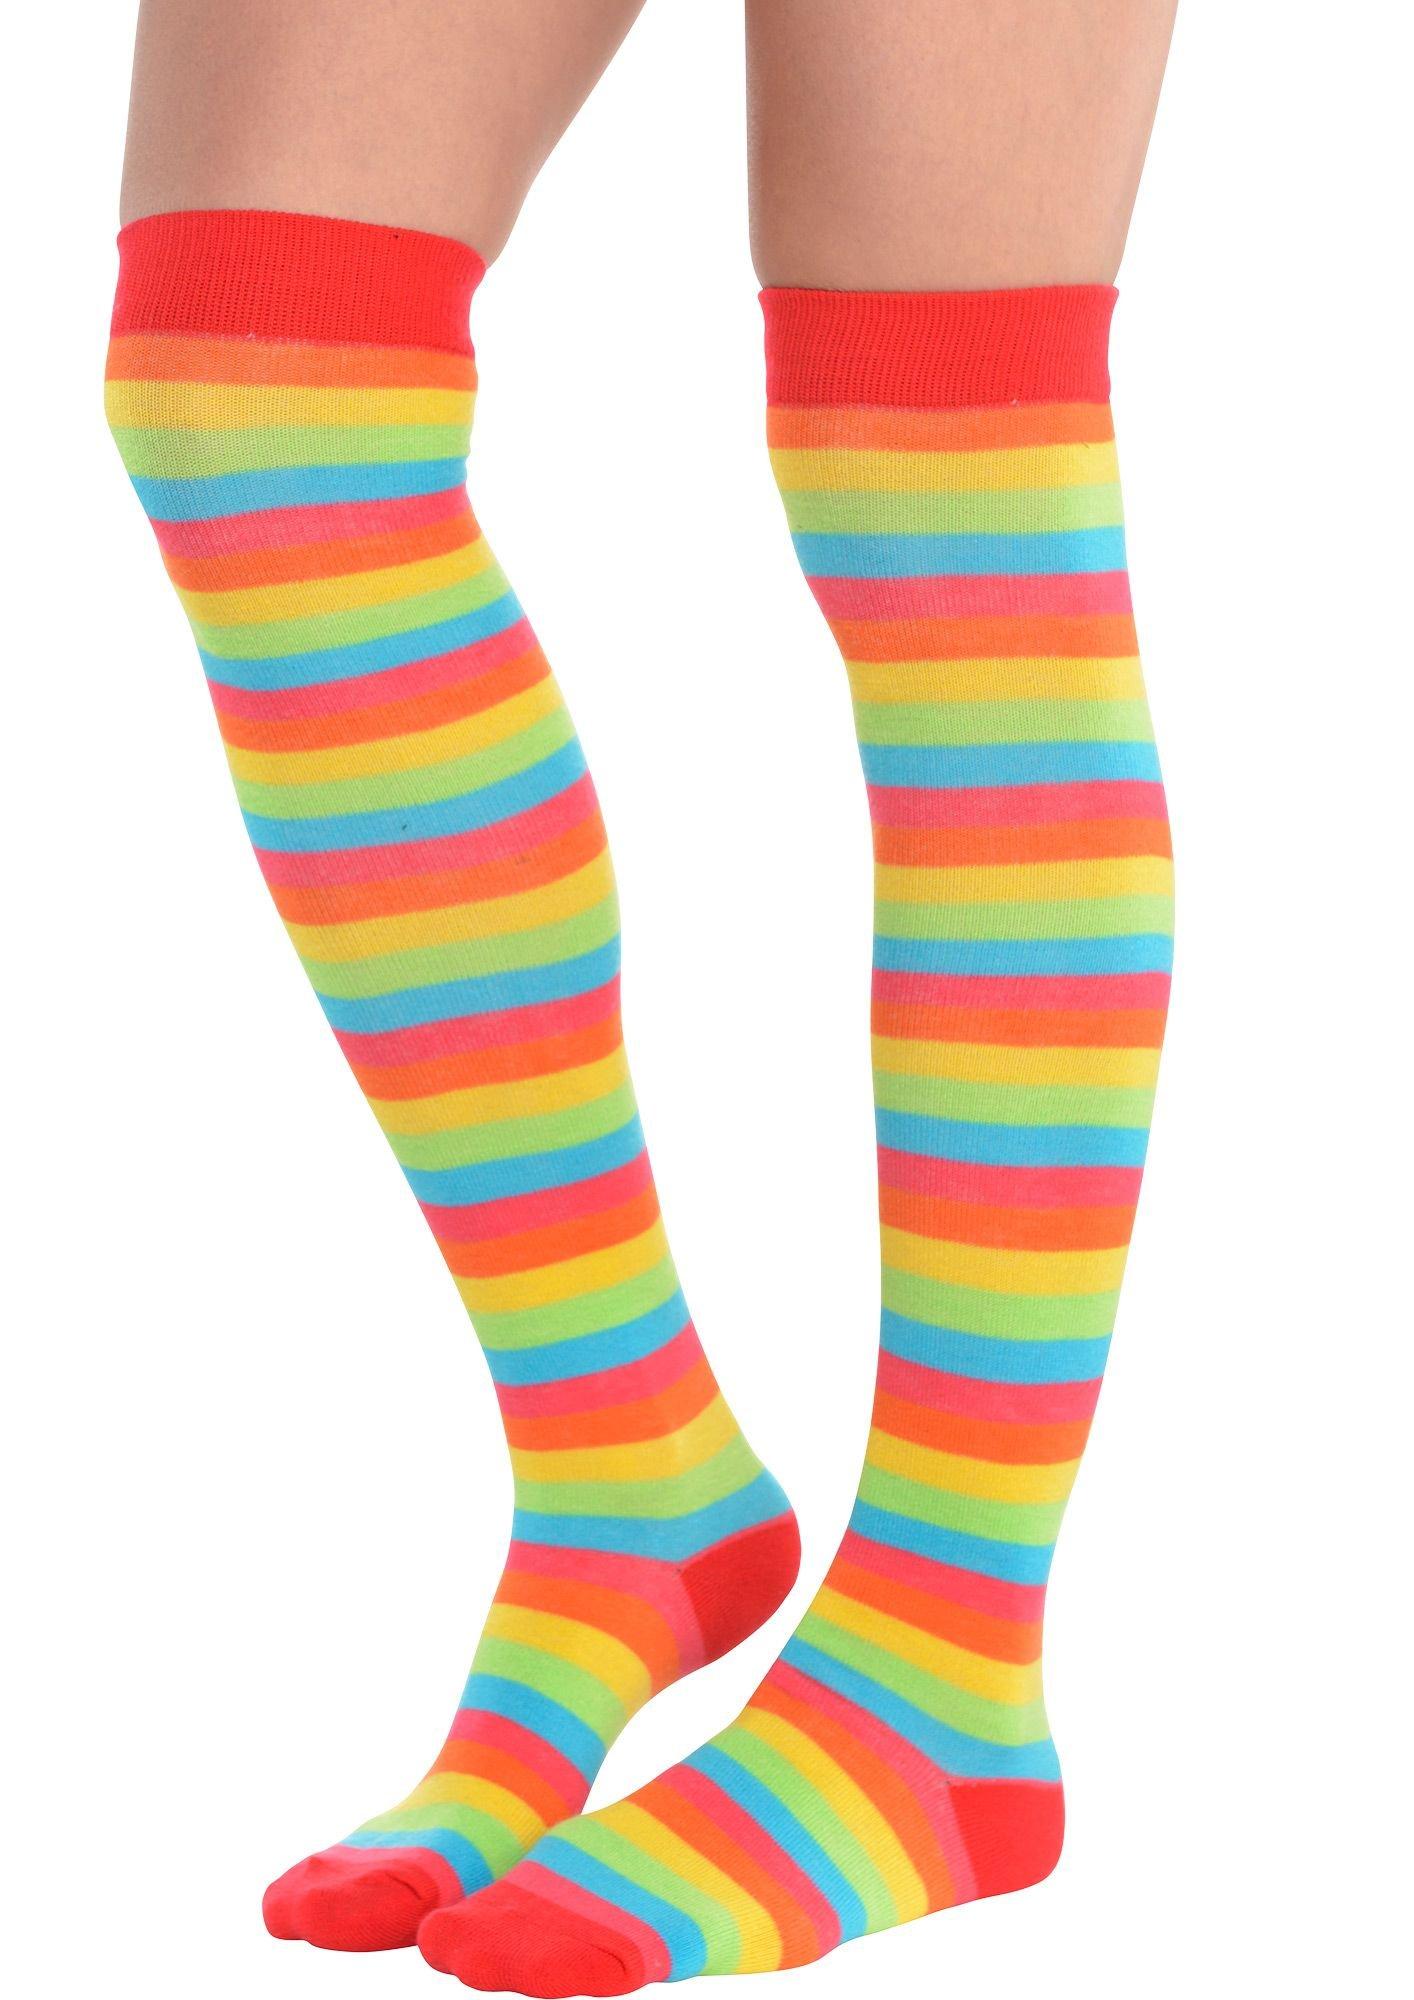 Rainbow Striped Knee High Socks | Party City